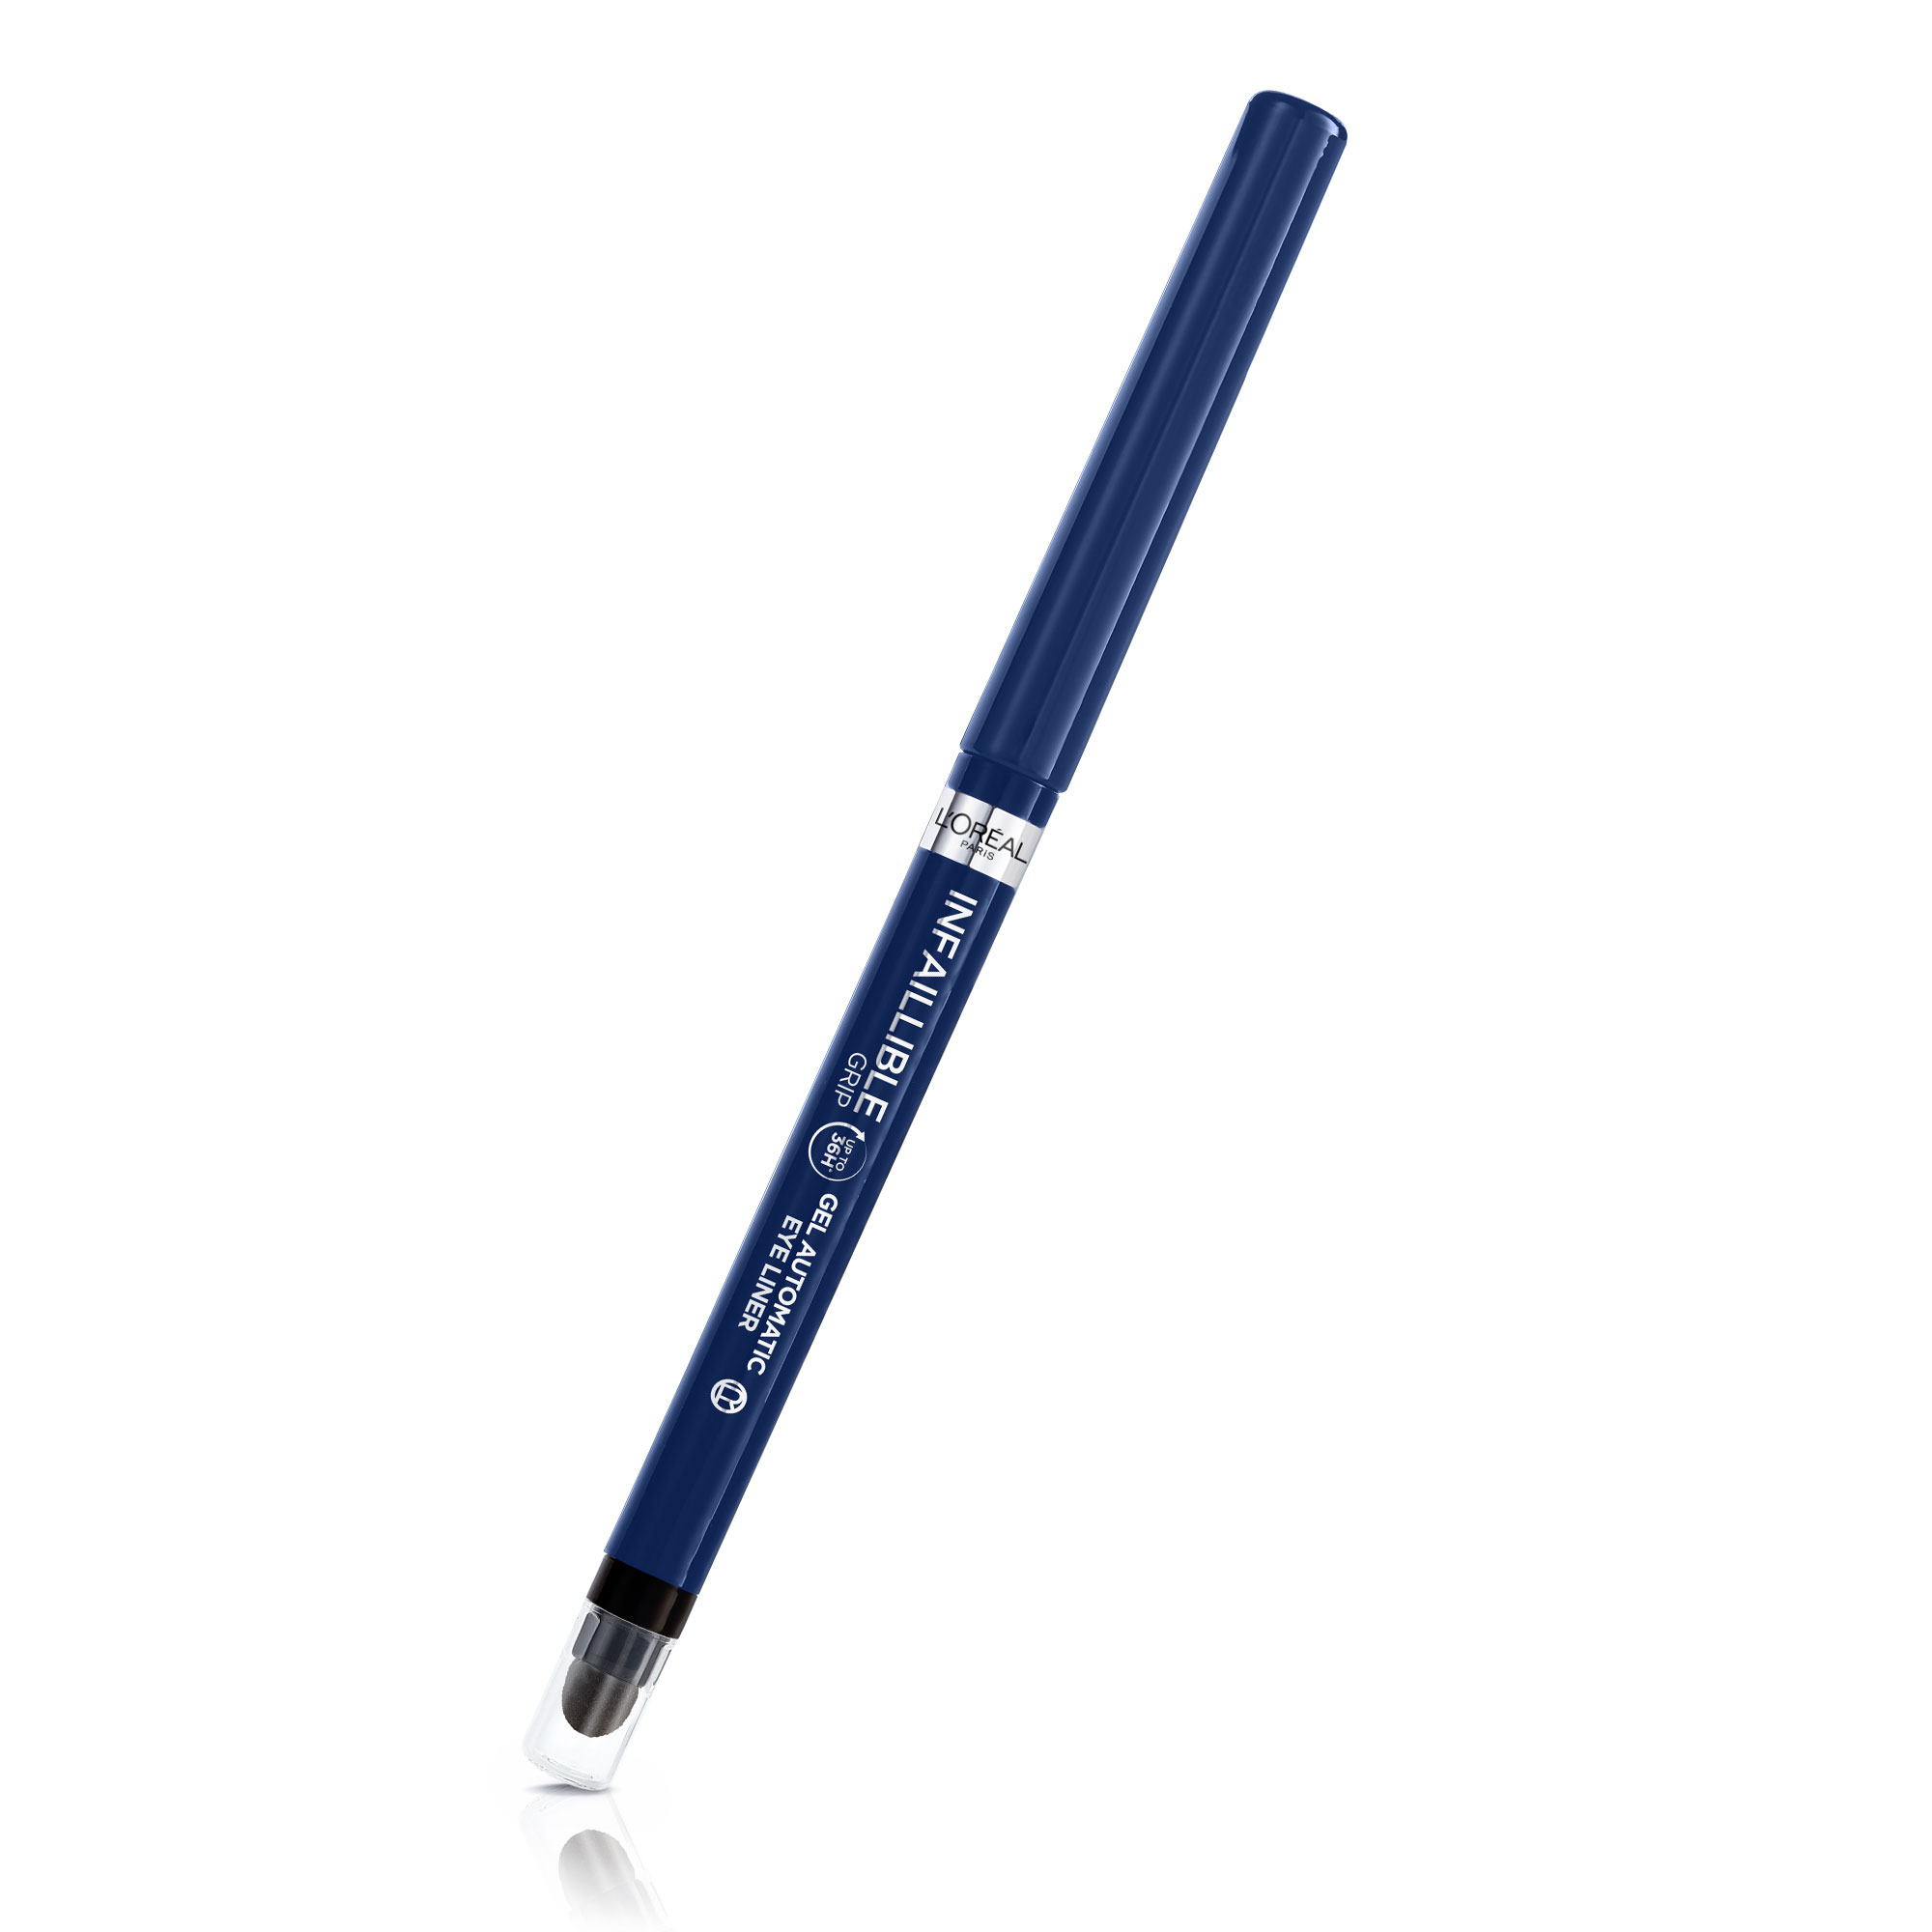 Creion mecanic pentru ochi tip gel Infaillible 36H Grip, Blue Jersey, 1.2 g, Loreal Paris